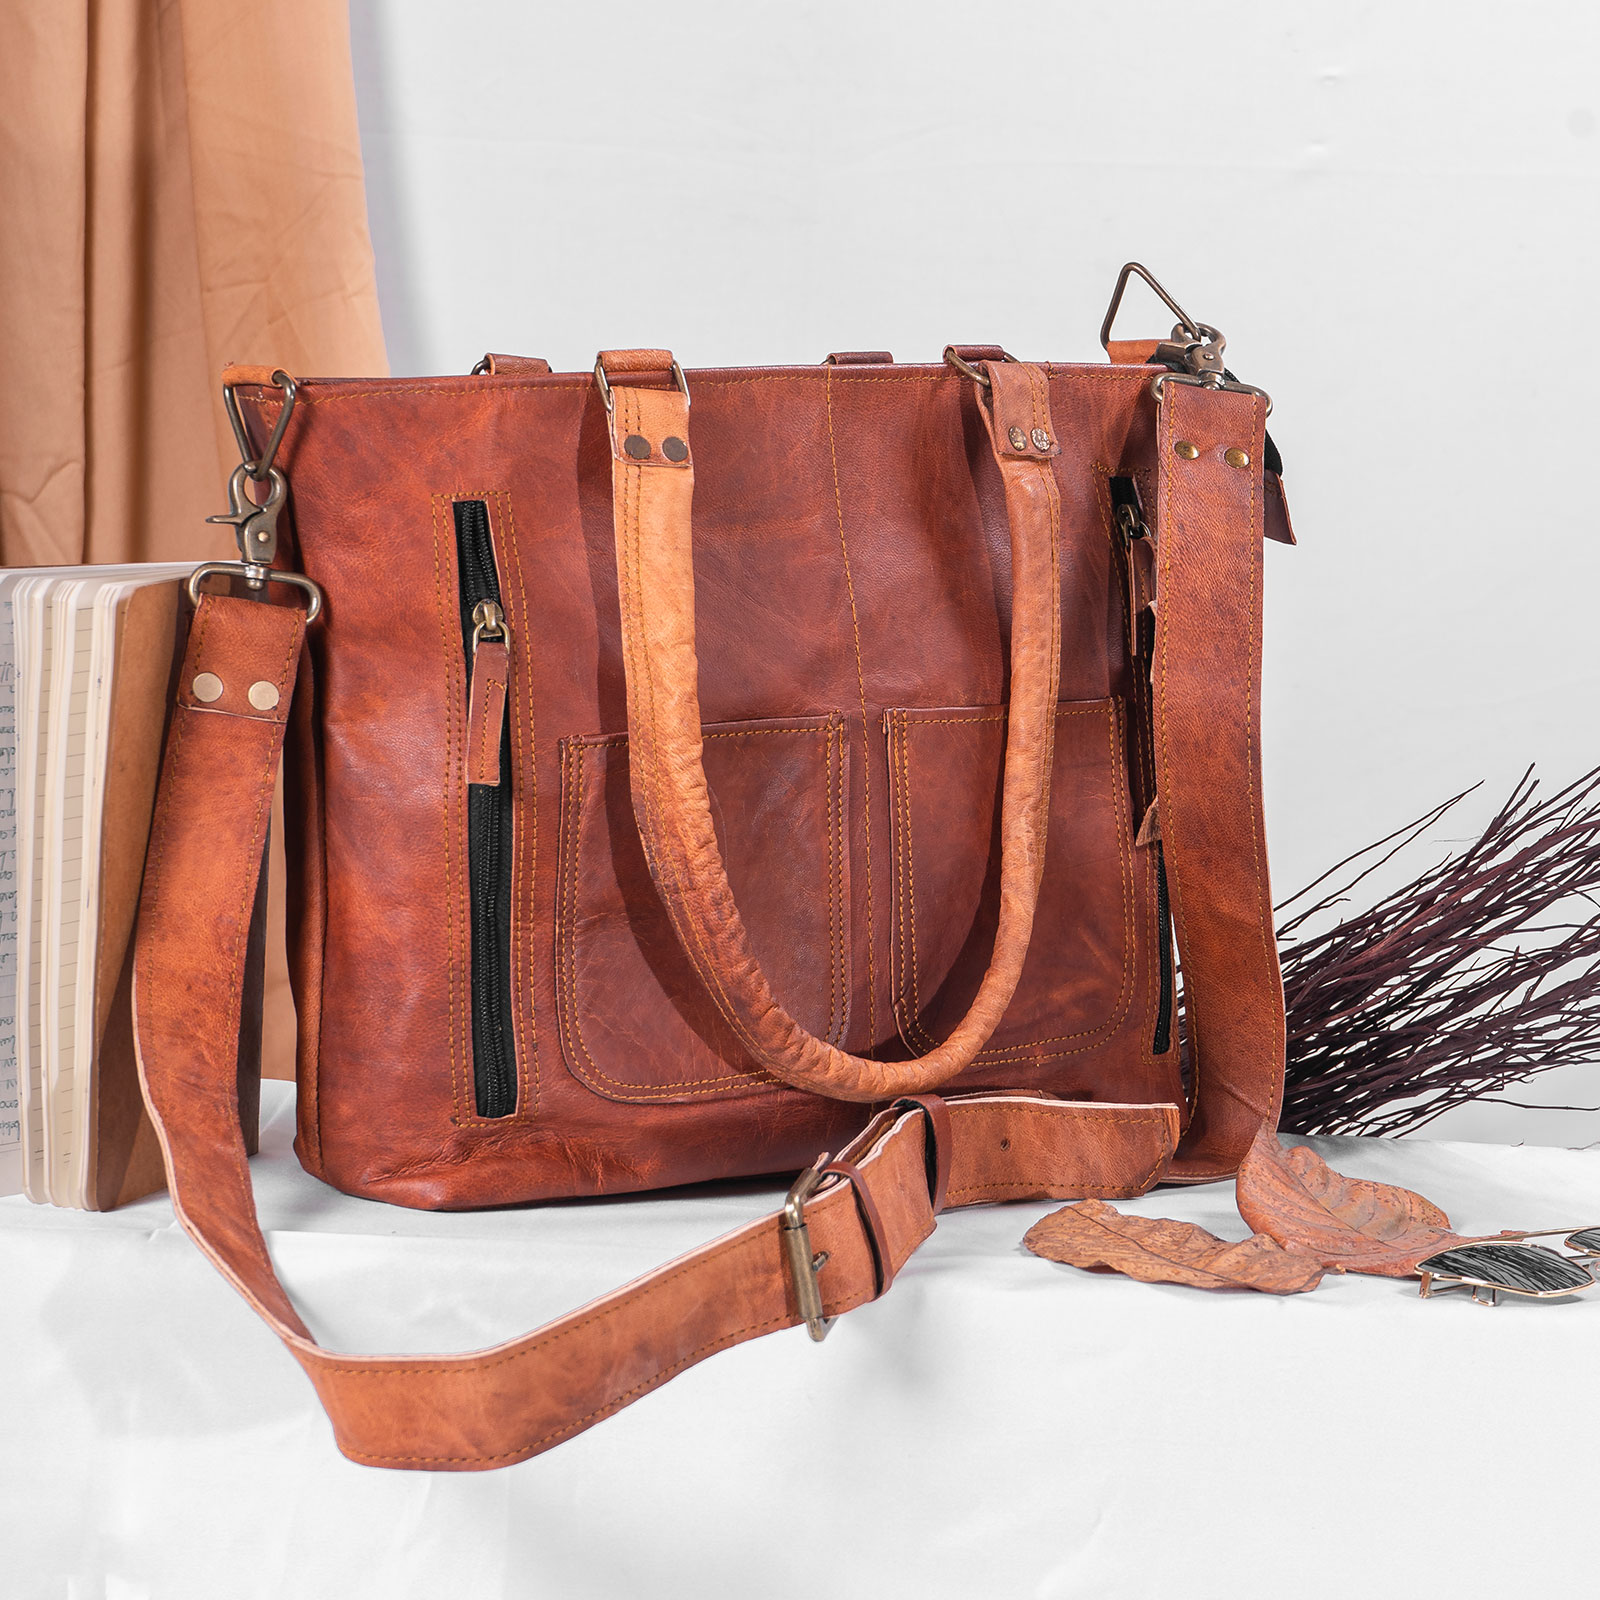 Madosh Womens Tote Handbag Genuine Leather Shoulder Purse Satchel Crossbody Ladies Brown Bag - image 4 of 6